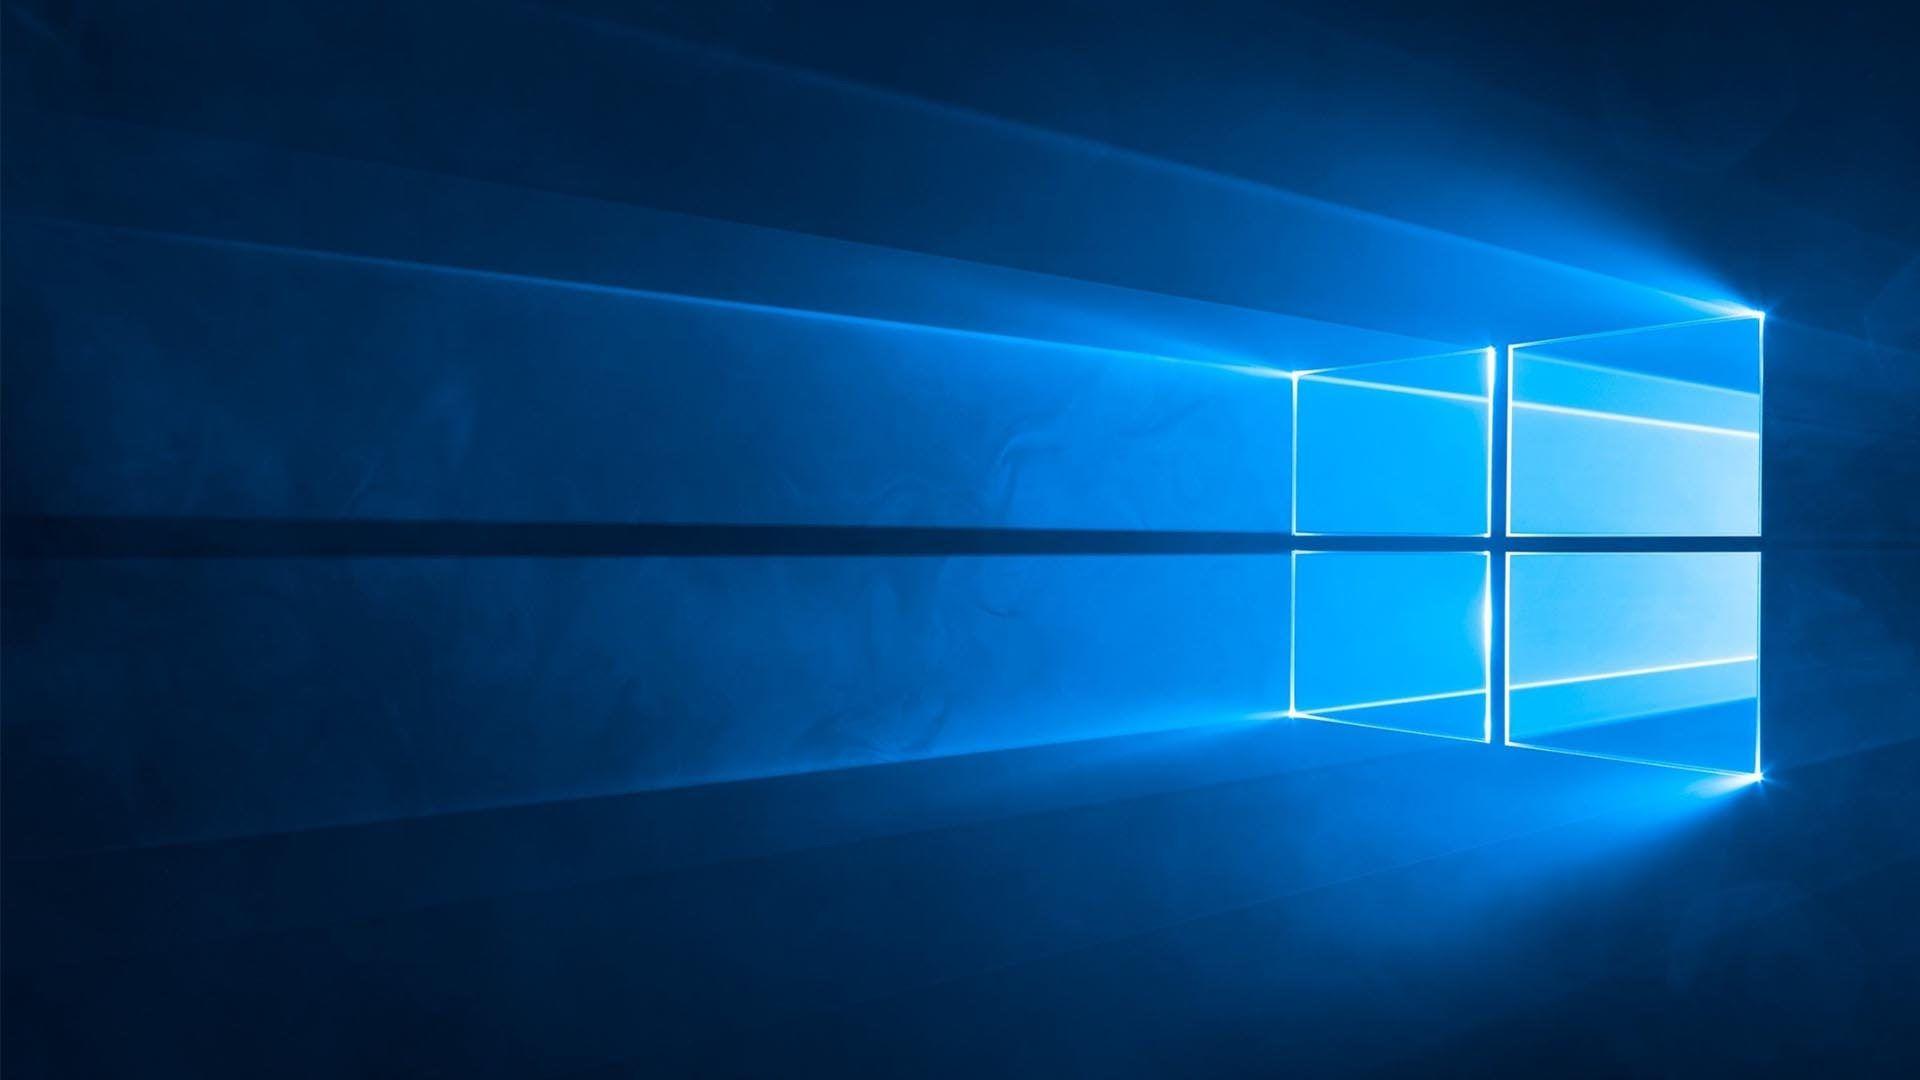 How to Change the Windows 10 Login Screen Wallpaper